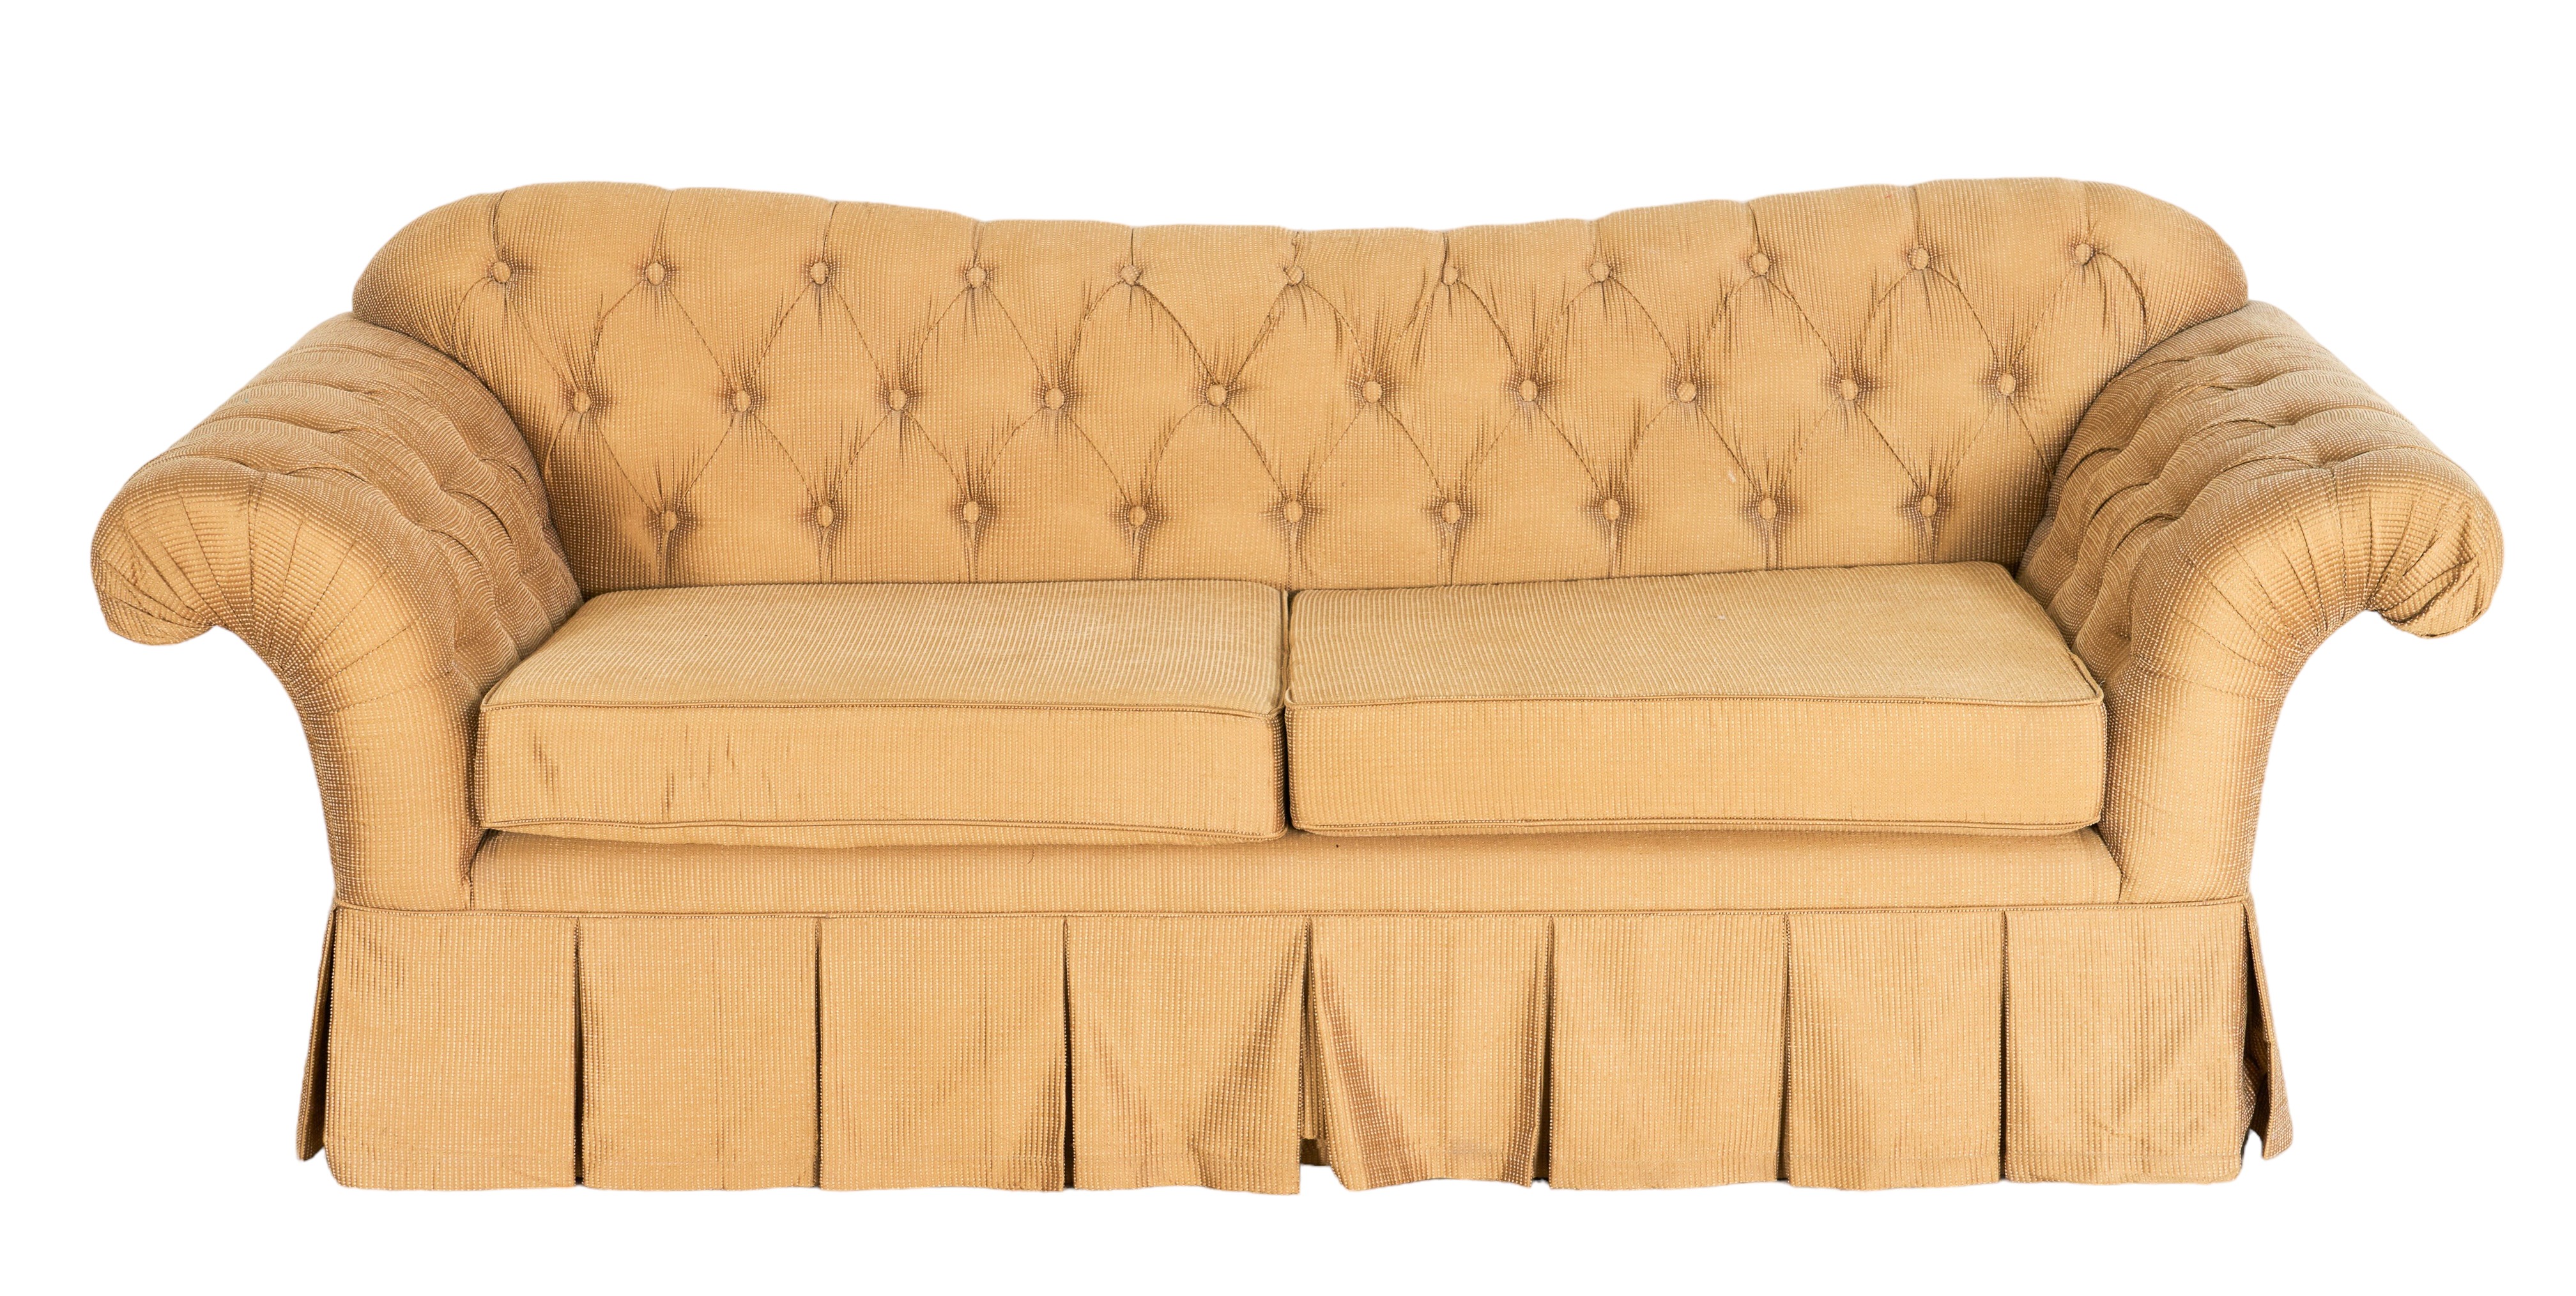 Custom upholstered tufted sofa  3c66c5